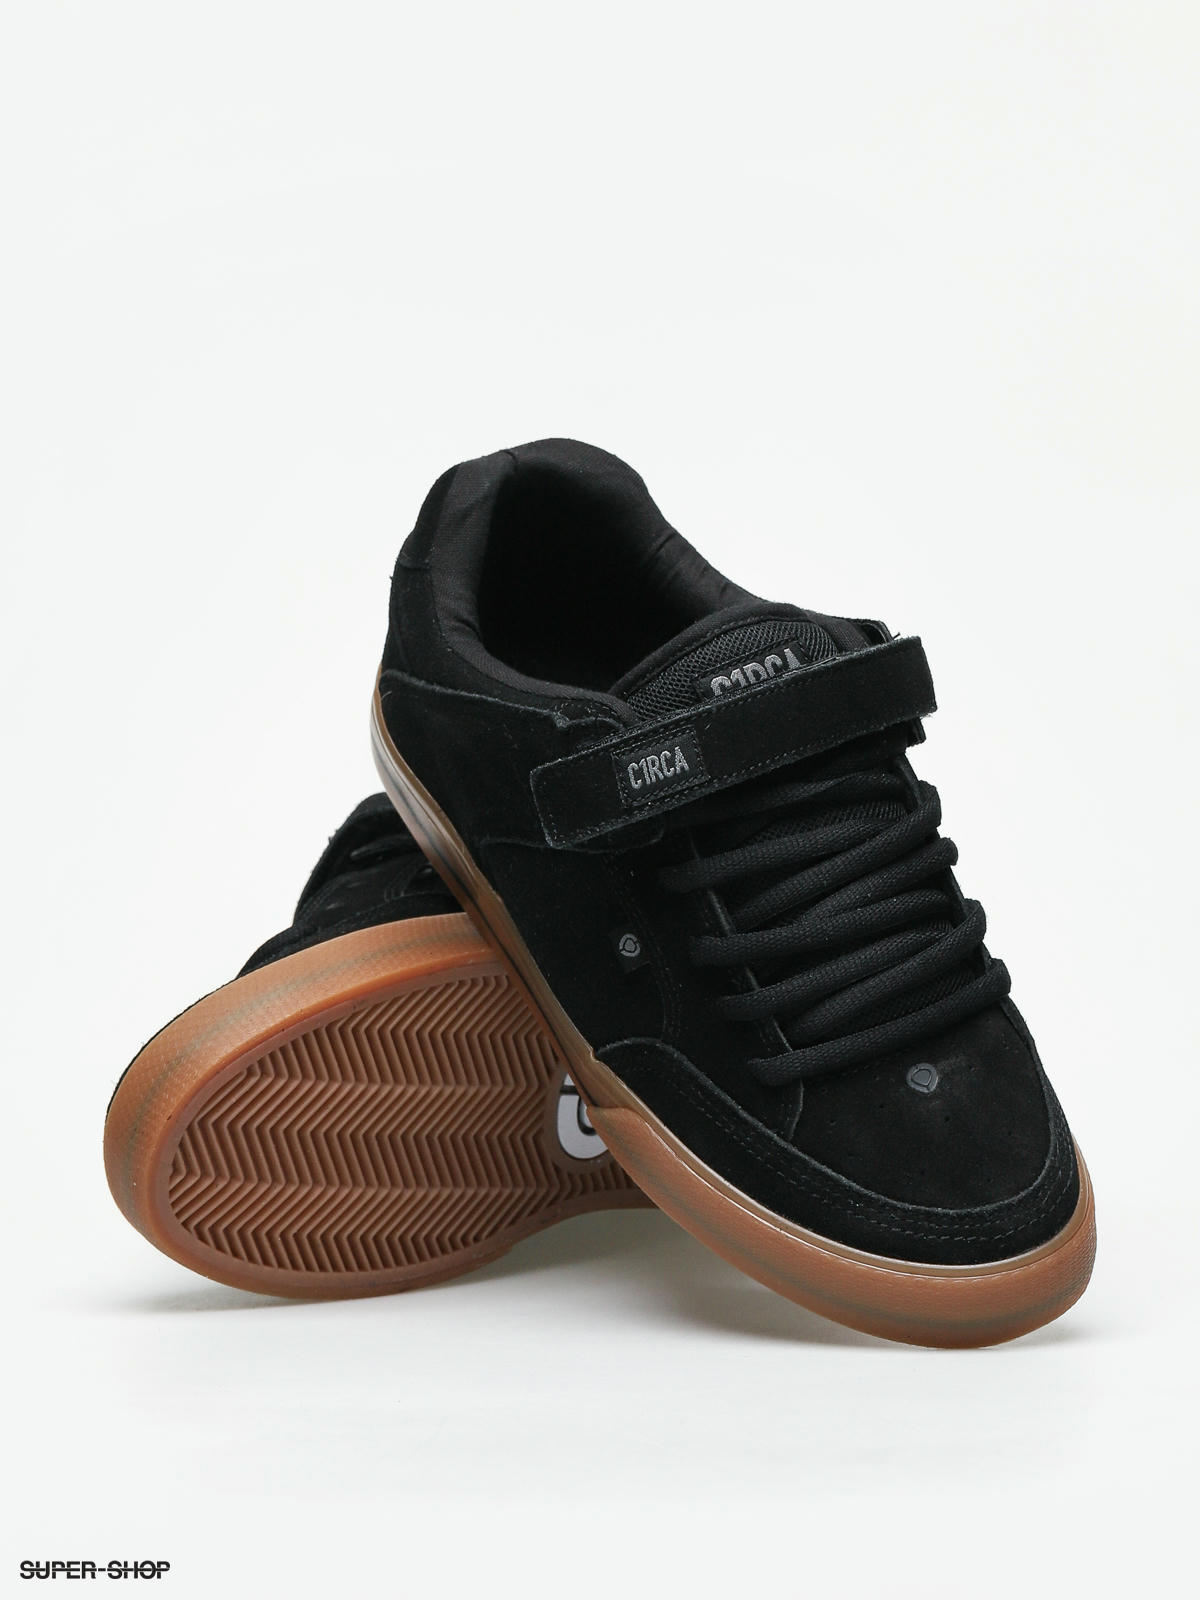 Circa 205 Vulc Shoes (black/gum)